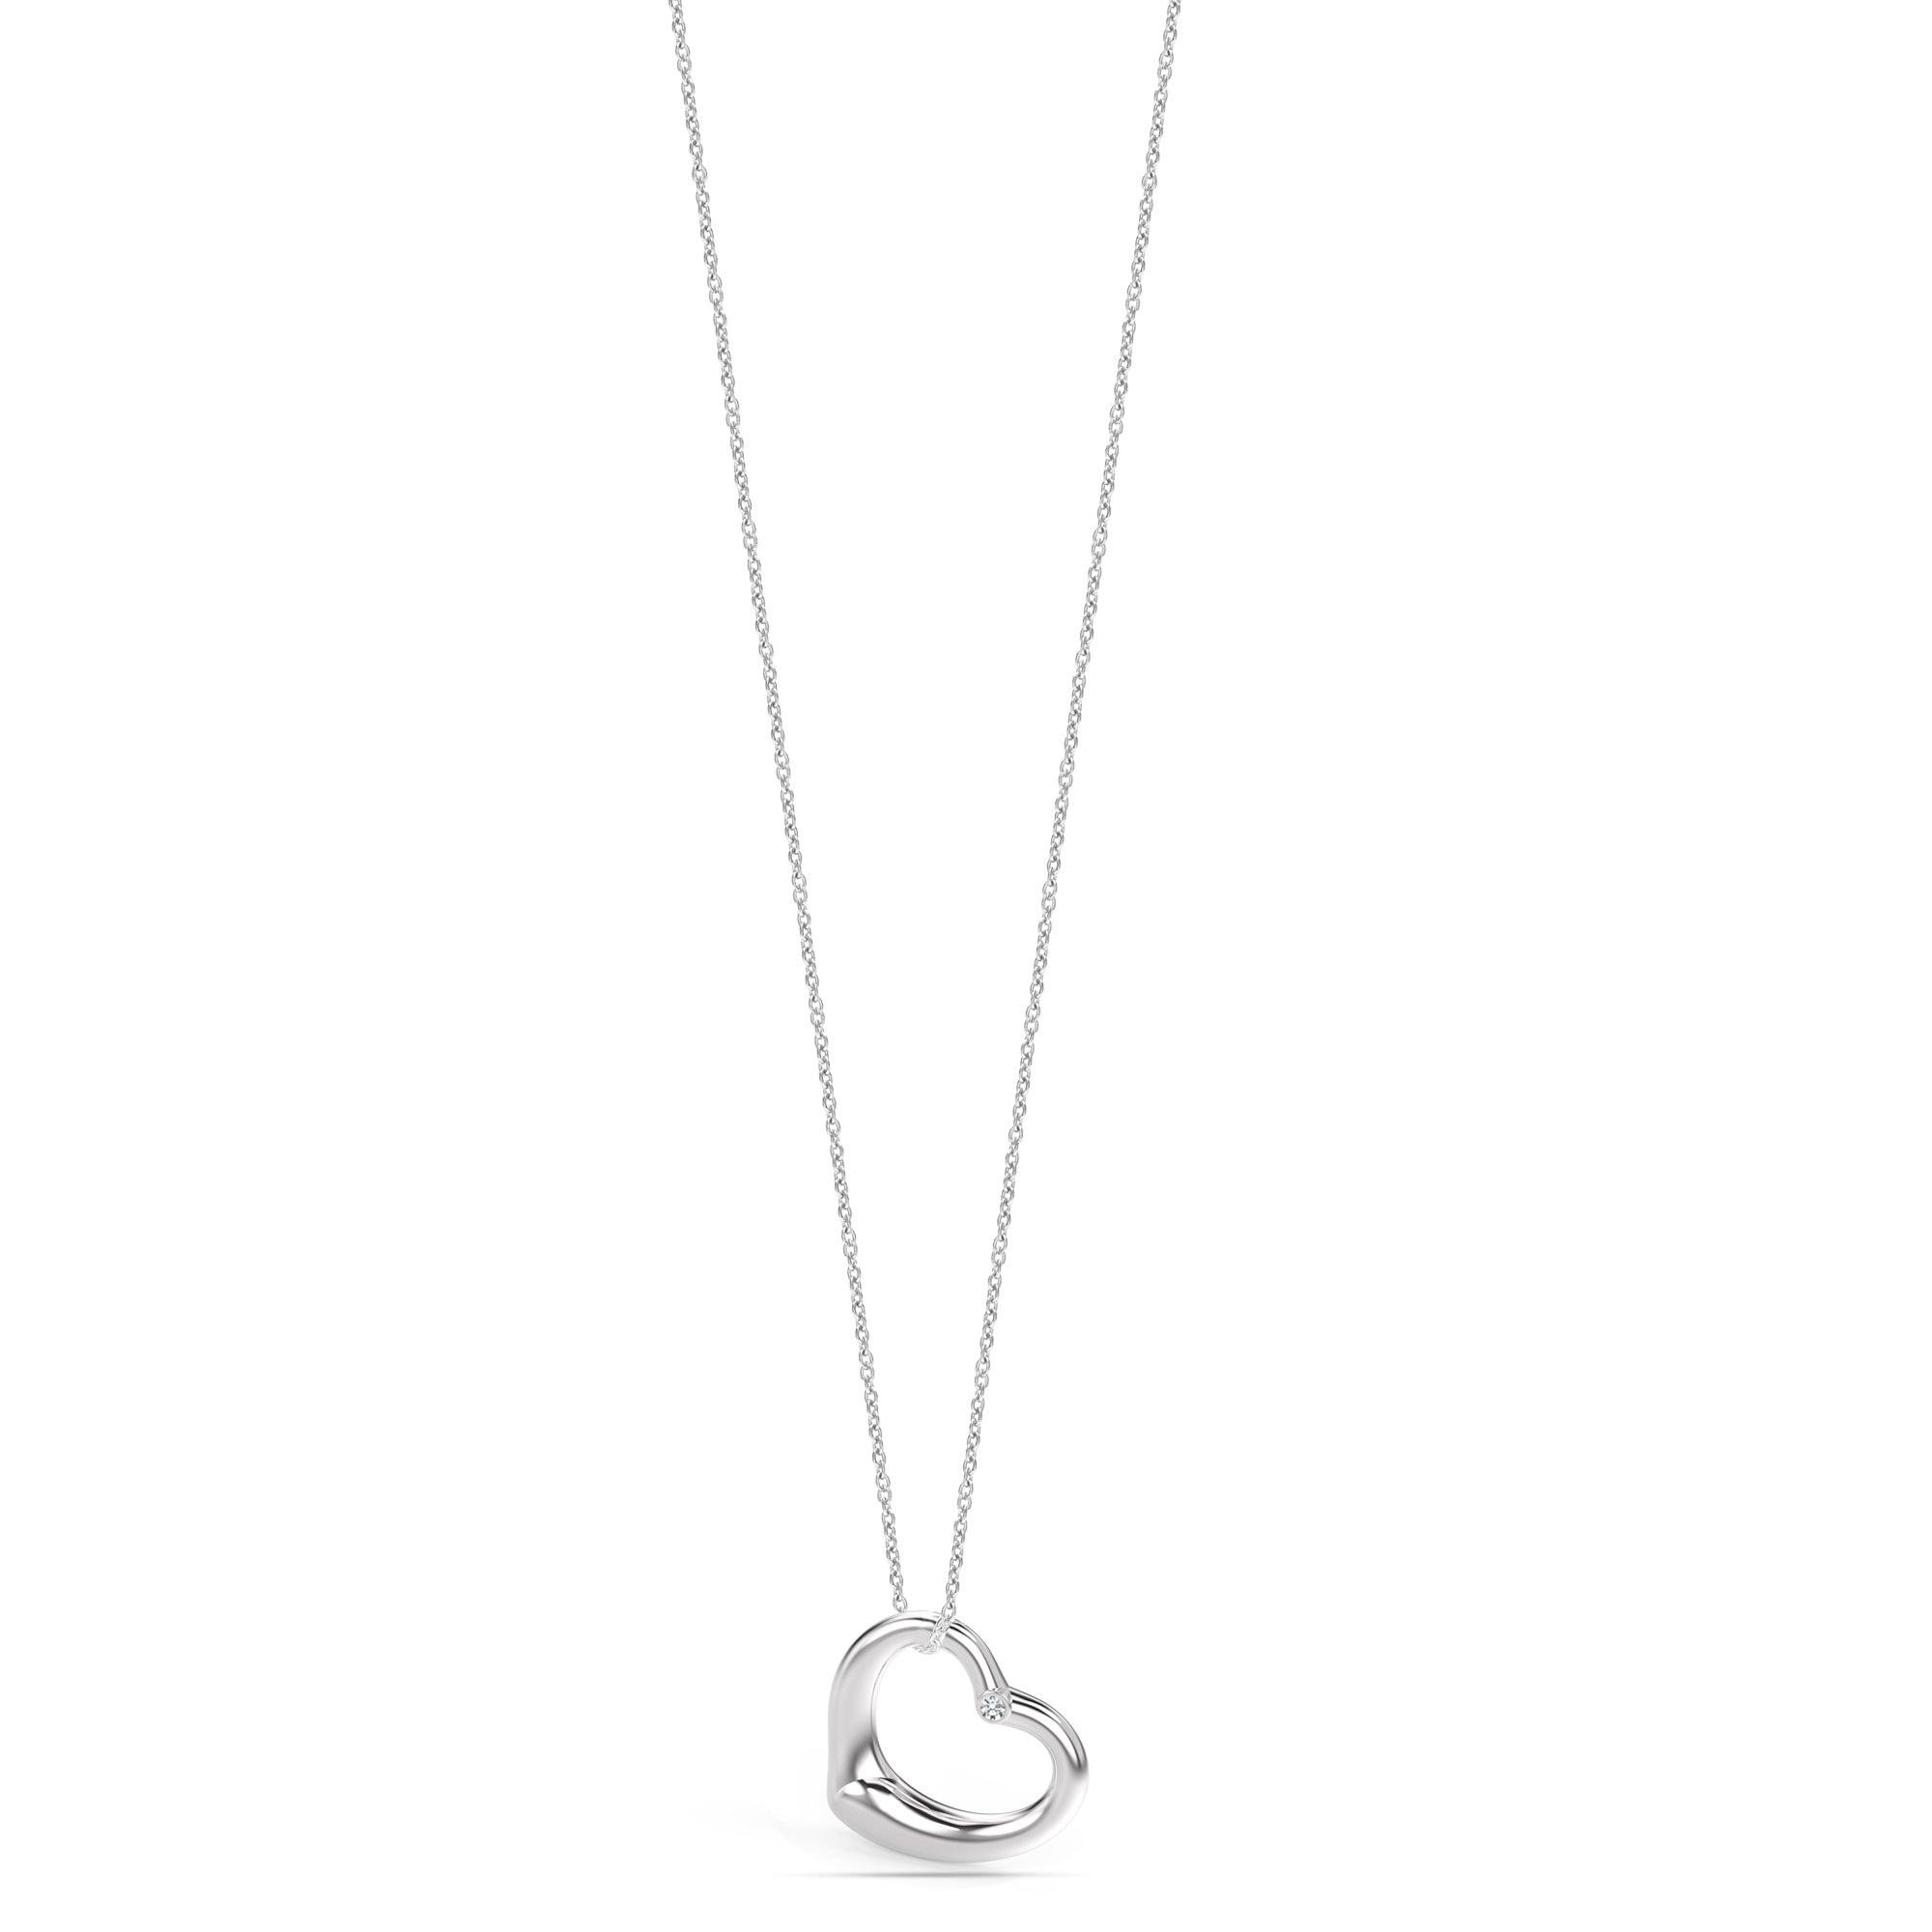 925 Sterling Silver CZ Open Heart Pendant Necklace for Women Teen